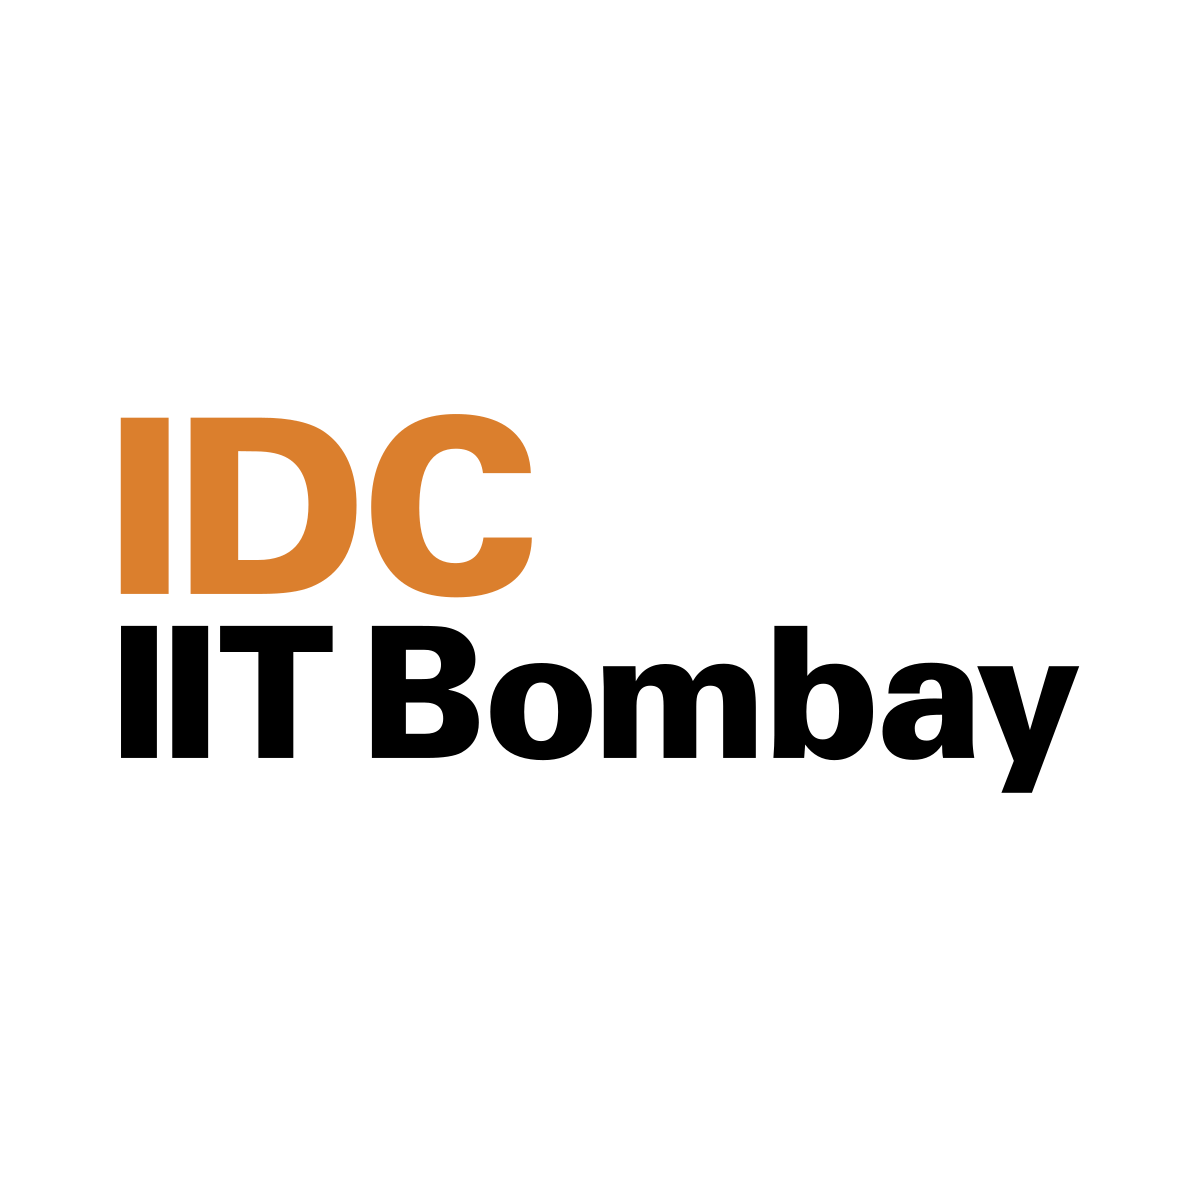 IDC Logo - Industrial Design Centre